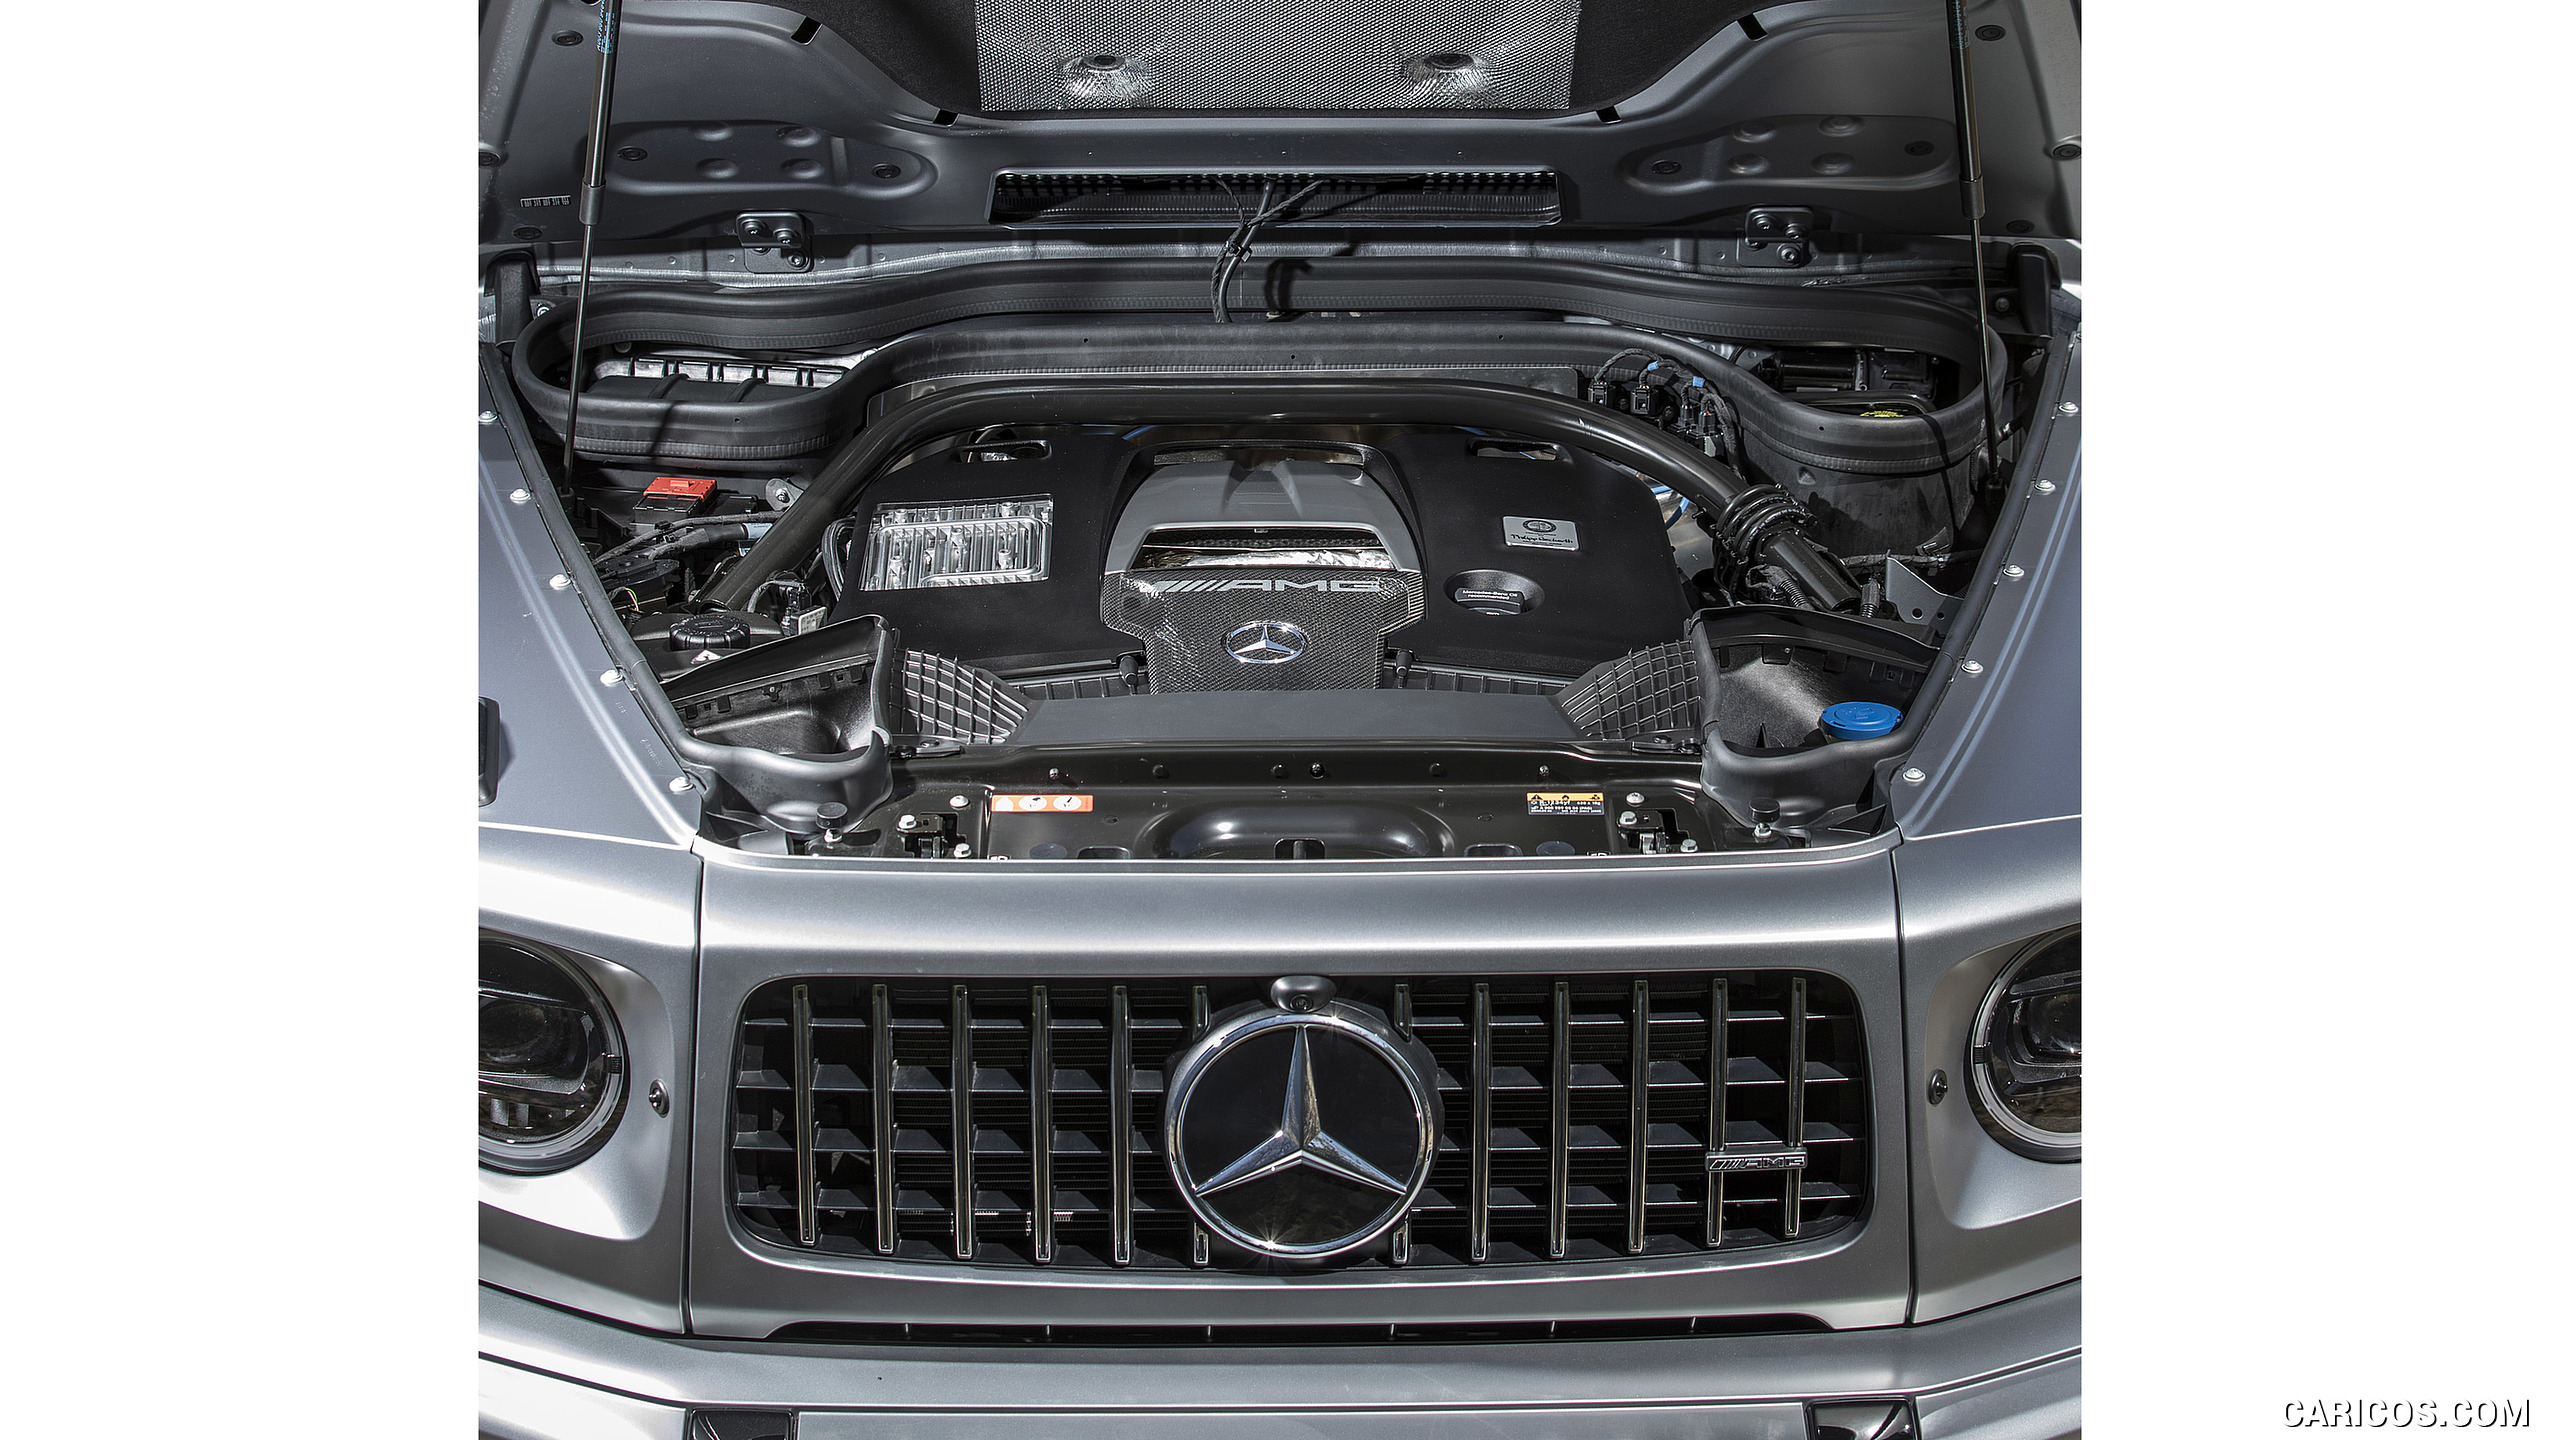 2019 Mercedes-AMG G63 - Engine, #185 of 452